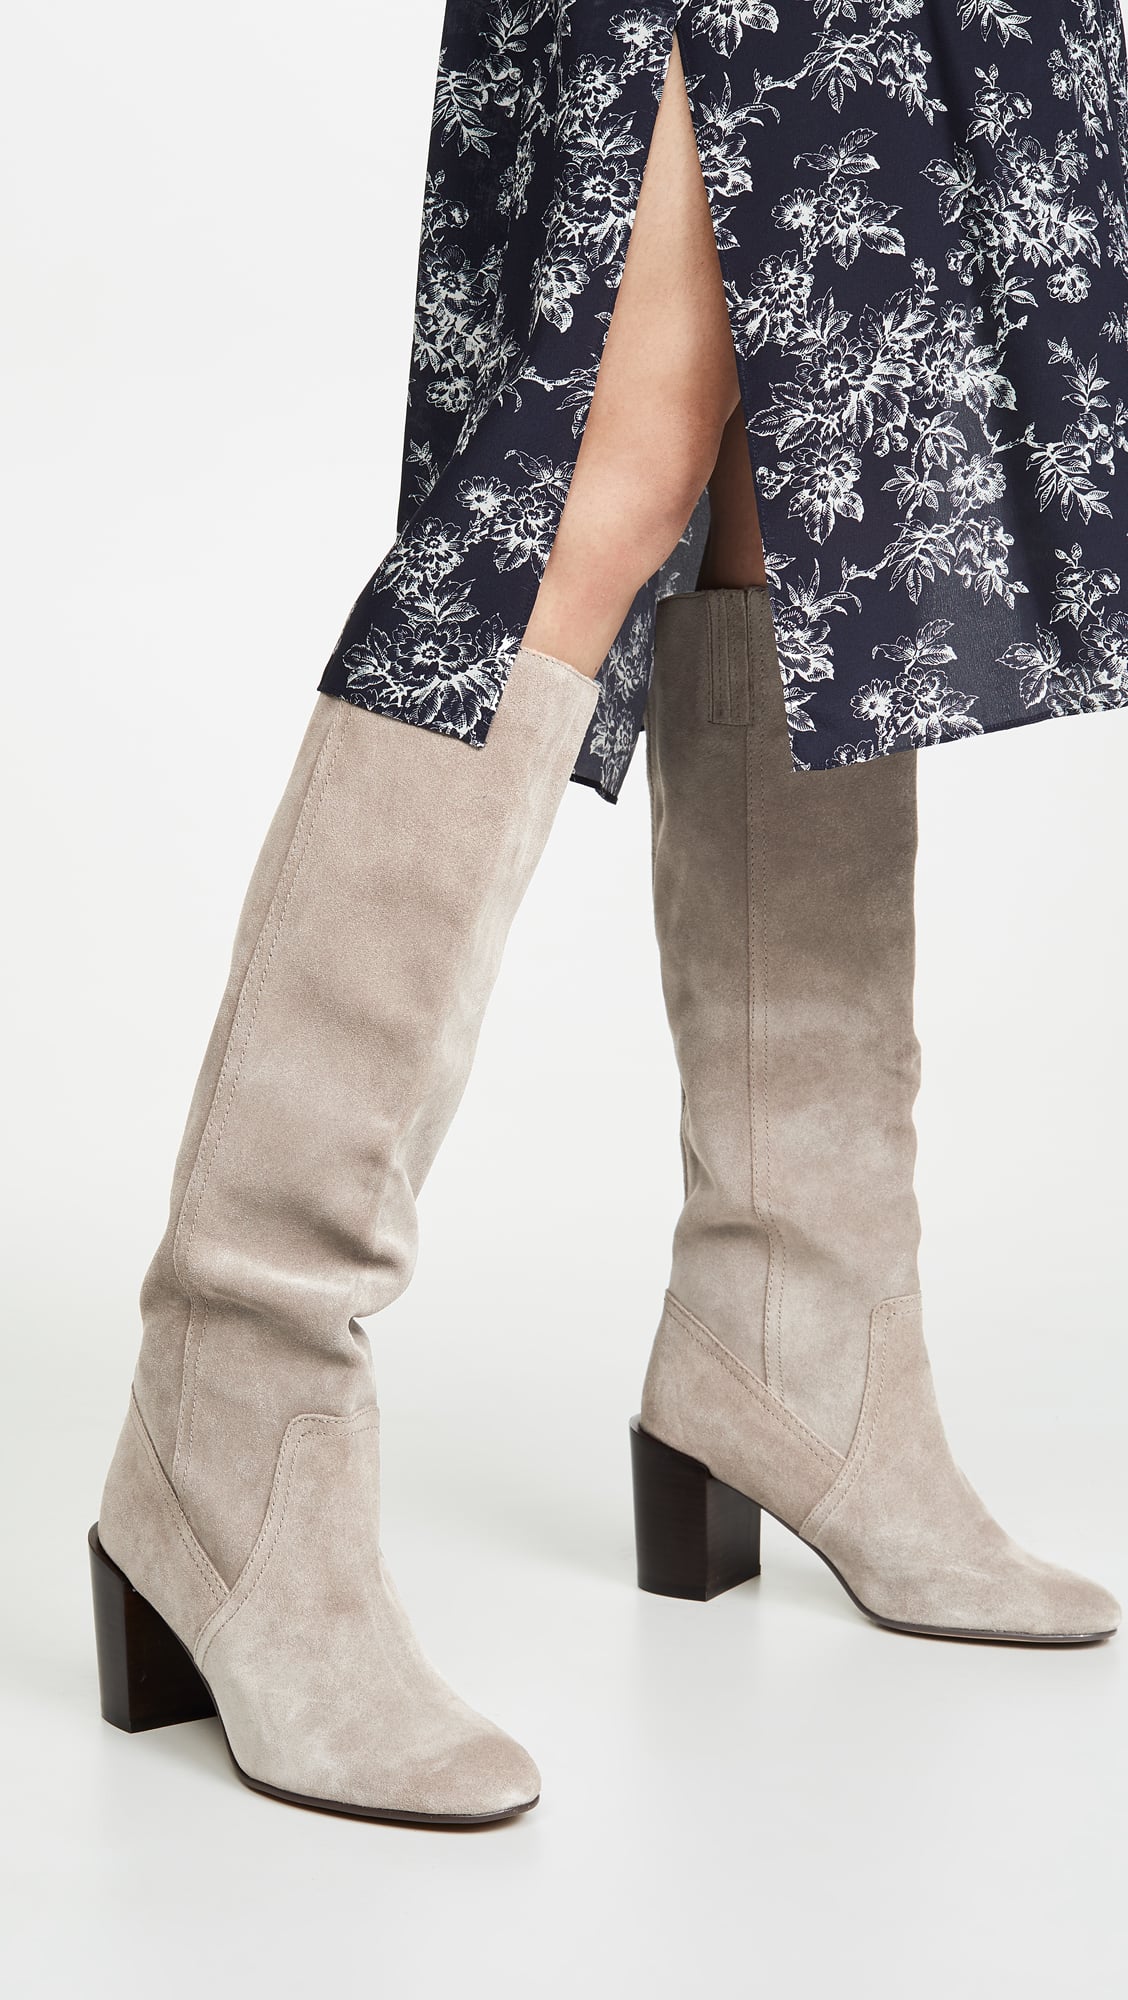 Knee-High Boots to Shop | POPSUGAR Fashion